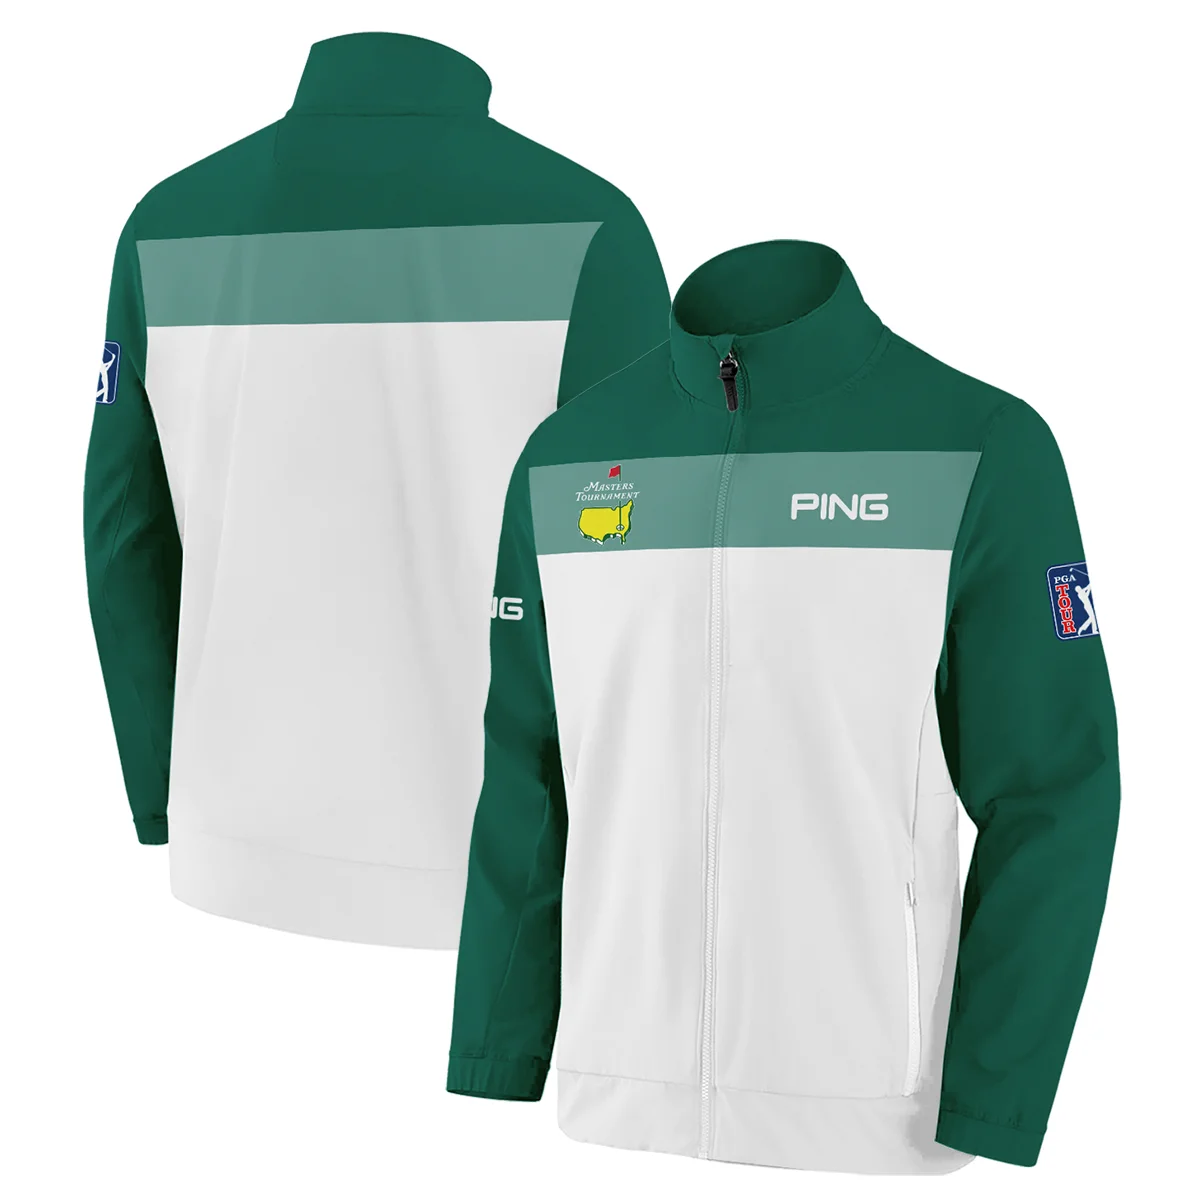 Golf Masters Tournament Ping Zipper Hoodie Shirt Sports Green And White All Over Print Zipper Hoodie Shirt